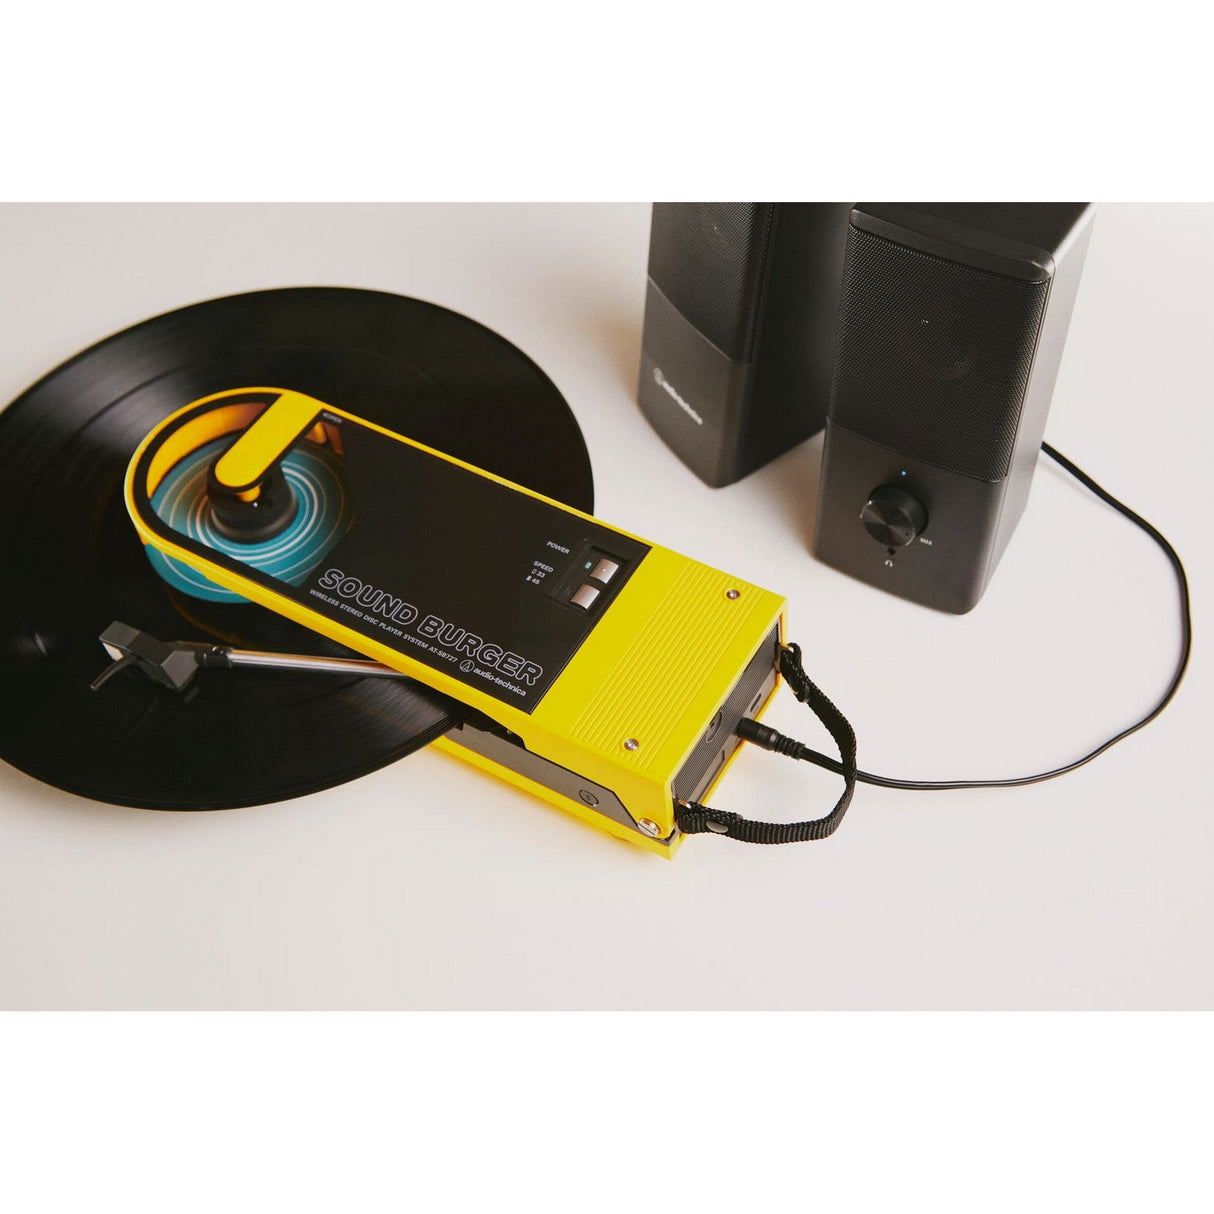 Audio-Technica AT-SB727 Sound Burger Portable Bluetooth Turntable